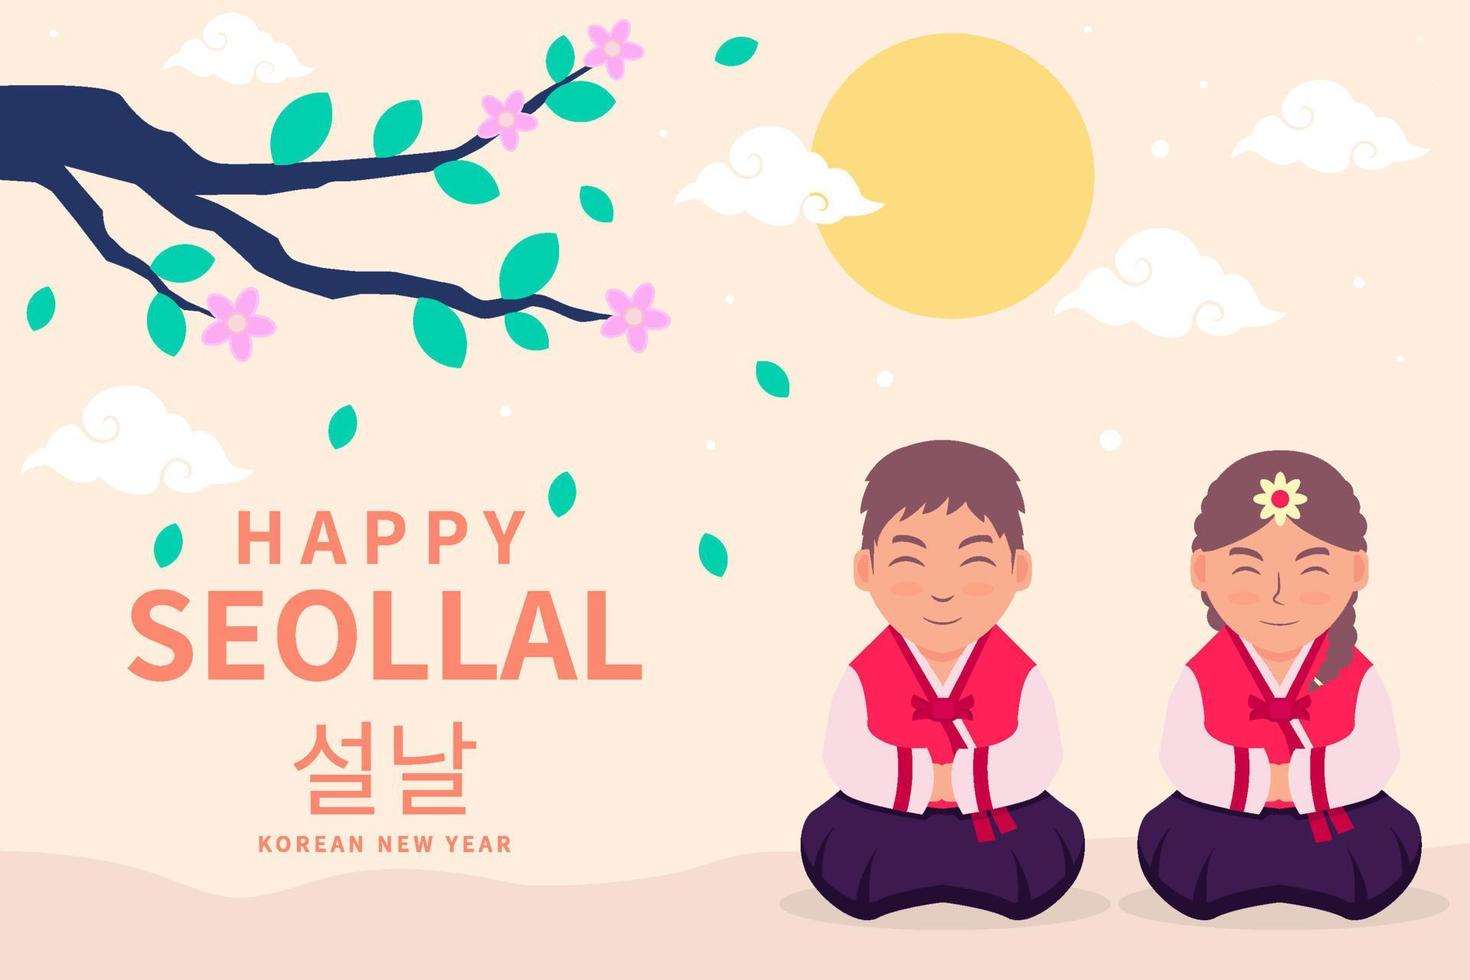 happy seollal horizontal banner illustration in flat design style vector